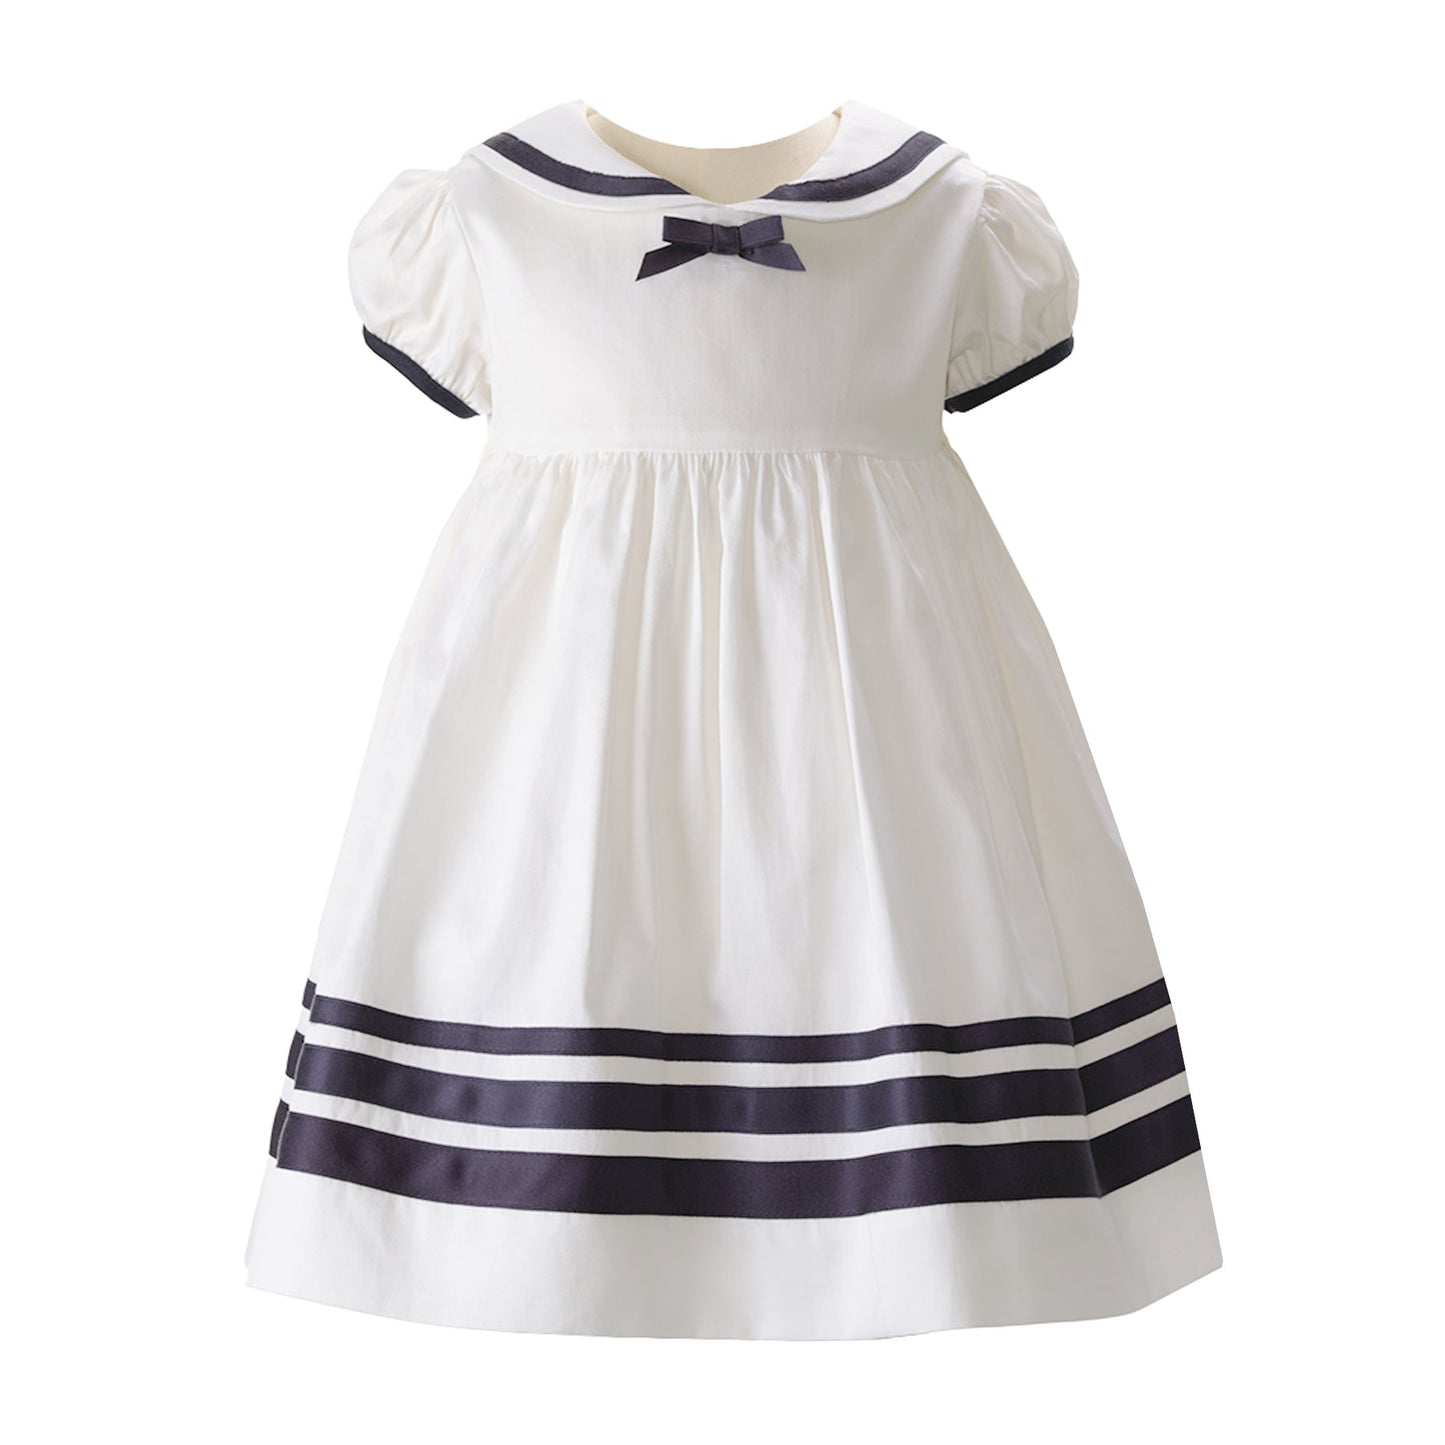 Rachel Riley infant girl classic sailor dress